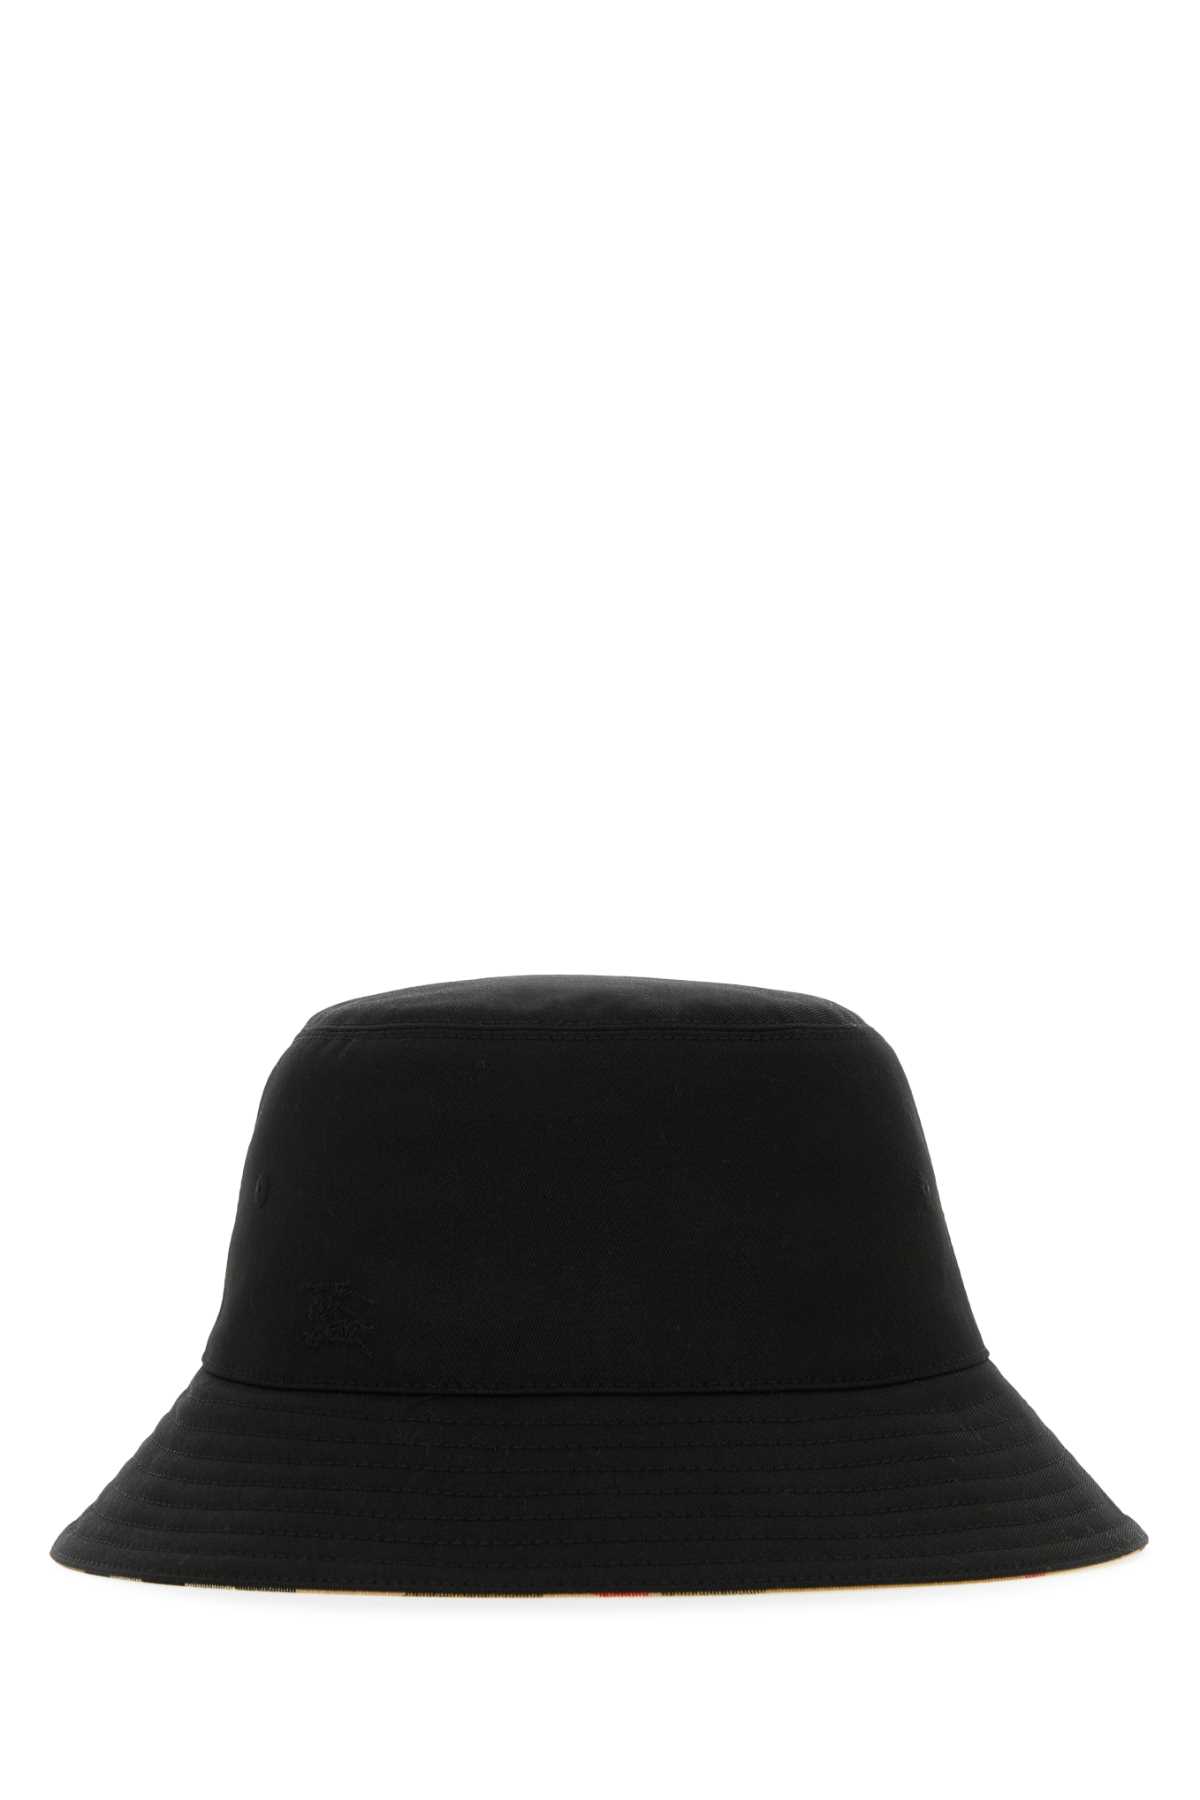 Shop Burberry Black Polyester Blend Bucket Hat